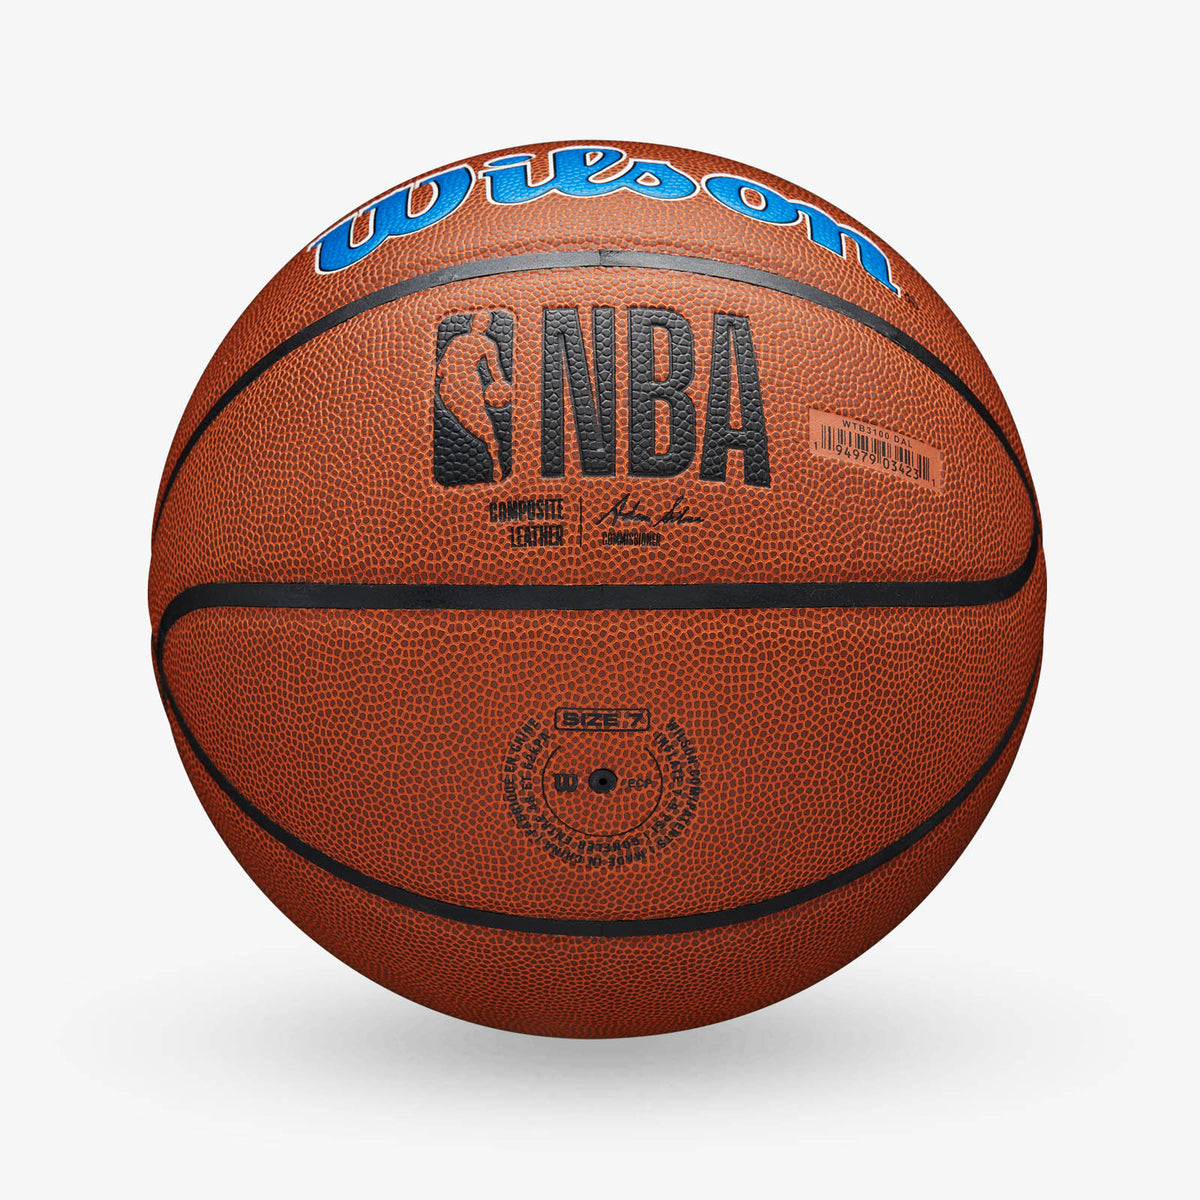 Dallas Mavericks NBA Team Alliance Basketball - Size 7